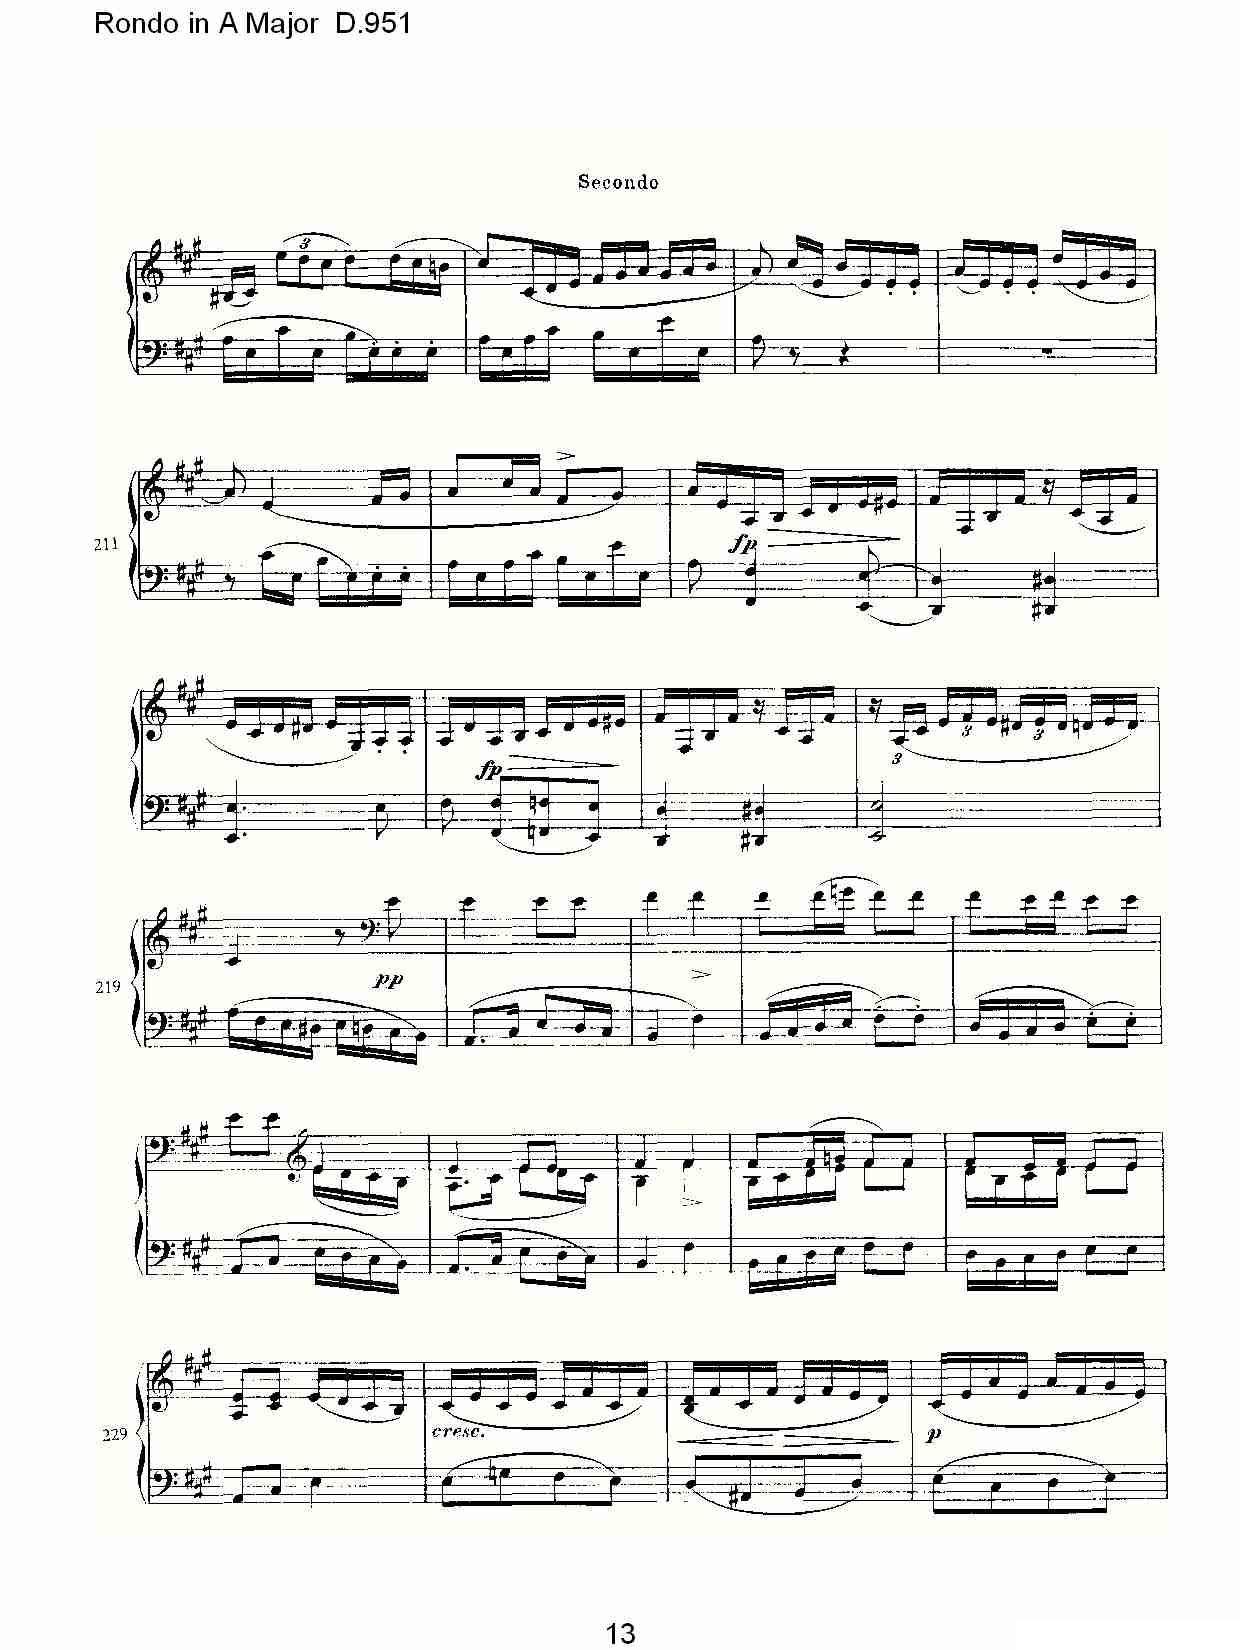 Rondo in A Major D.951（Ａ大调回旋曲D.951）钢琴曲谱（图13）